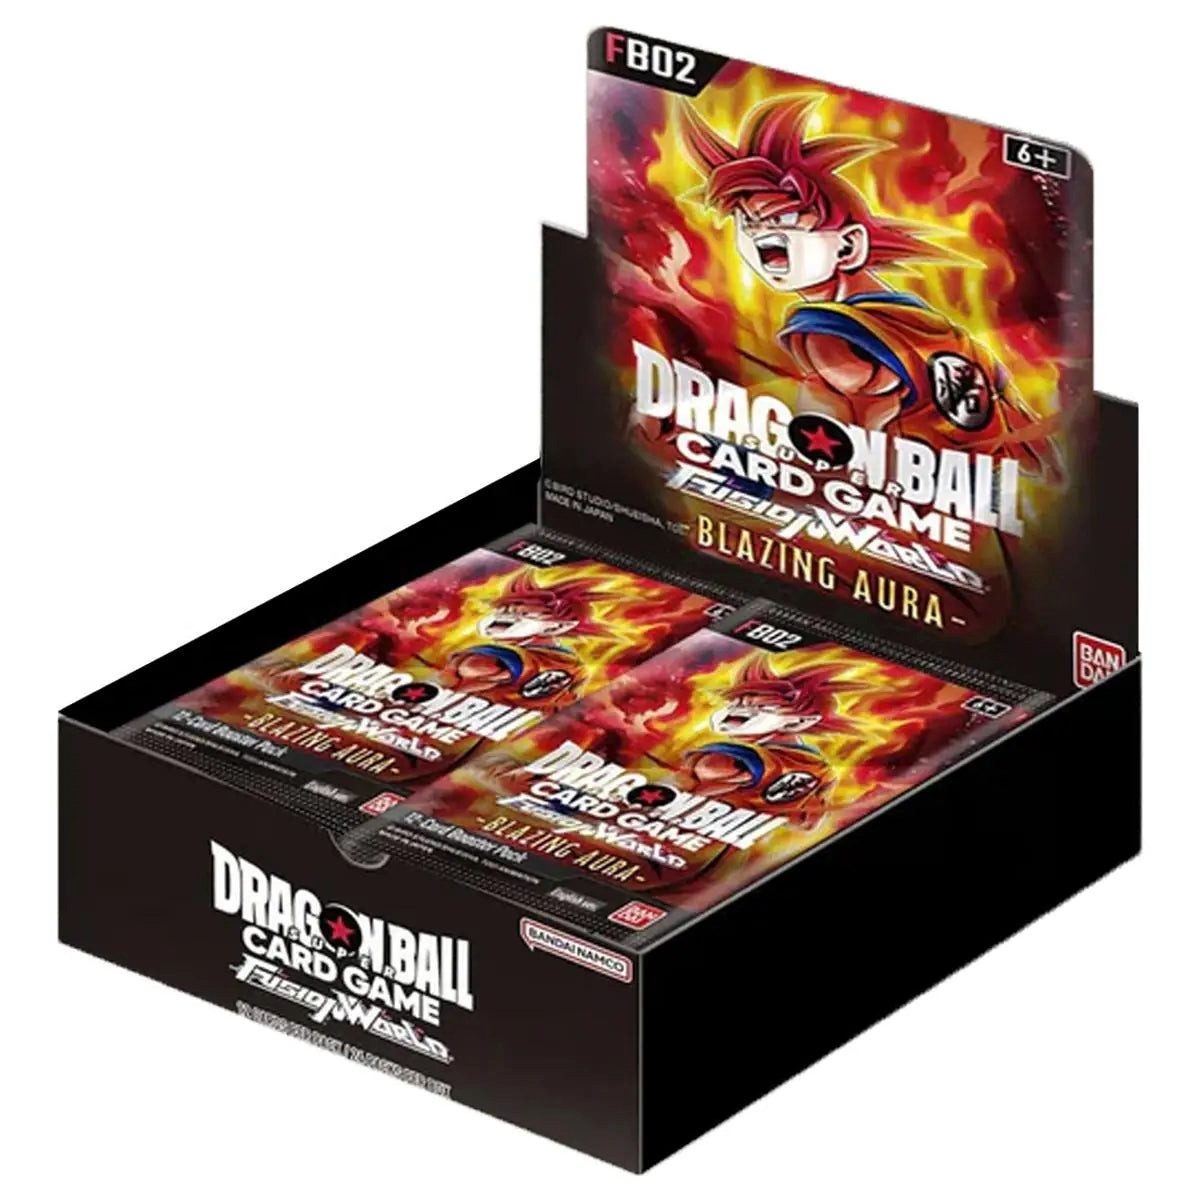 Bandai Sammelkarte Dragon Ball Super Fusion World Blazing Aura FB02 - Display (englisch), 24 Booster Packs